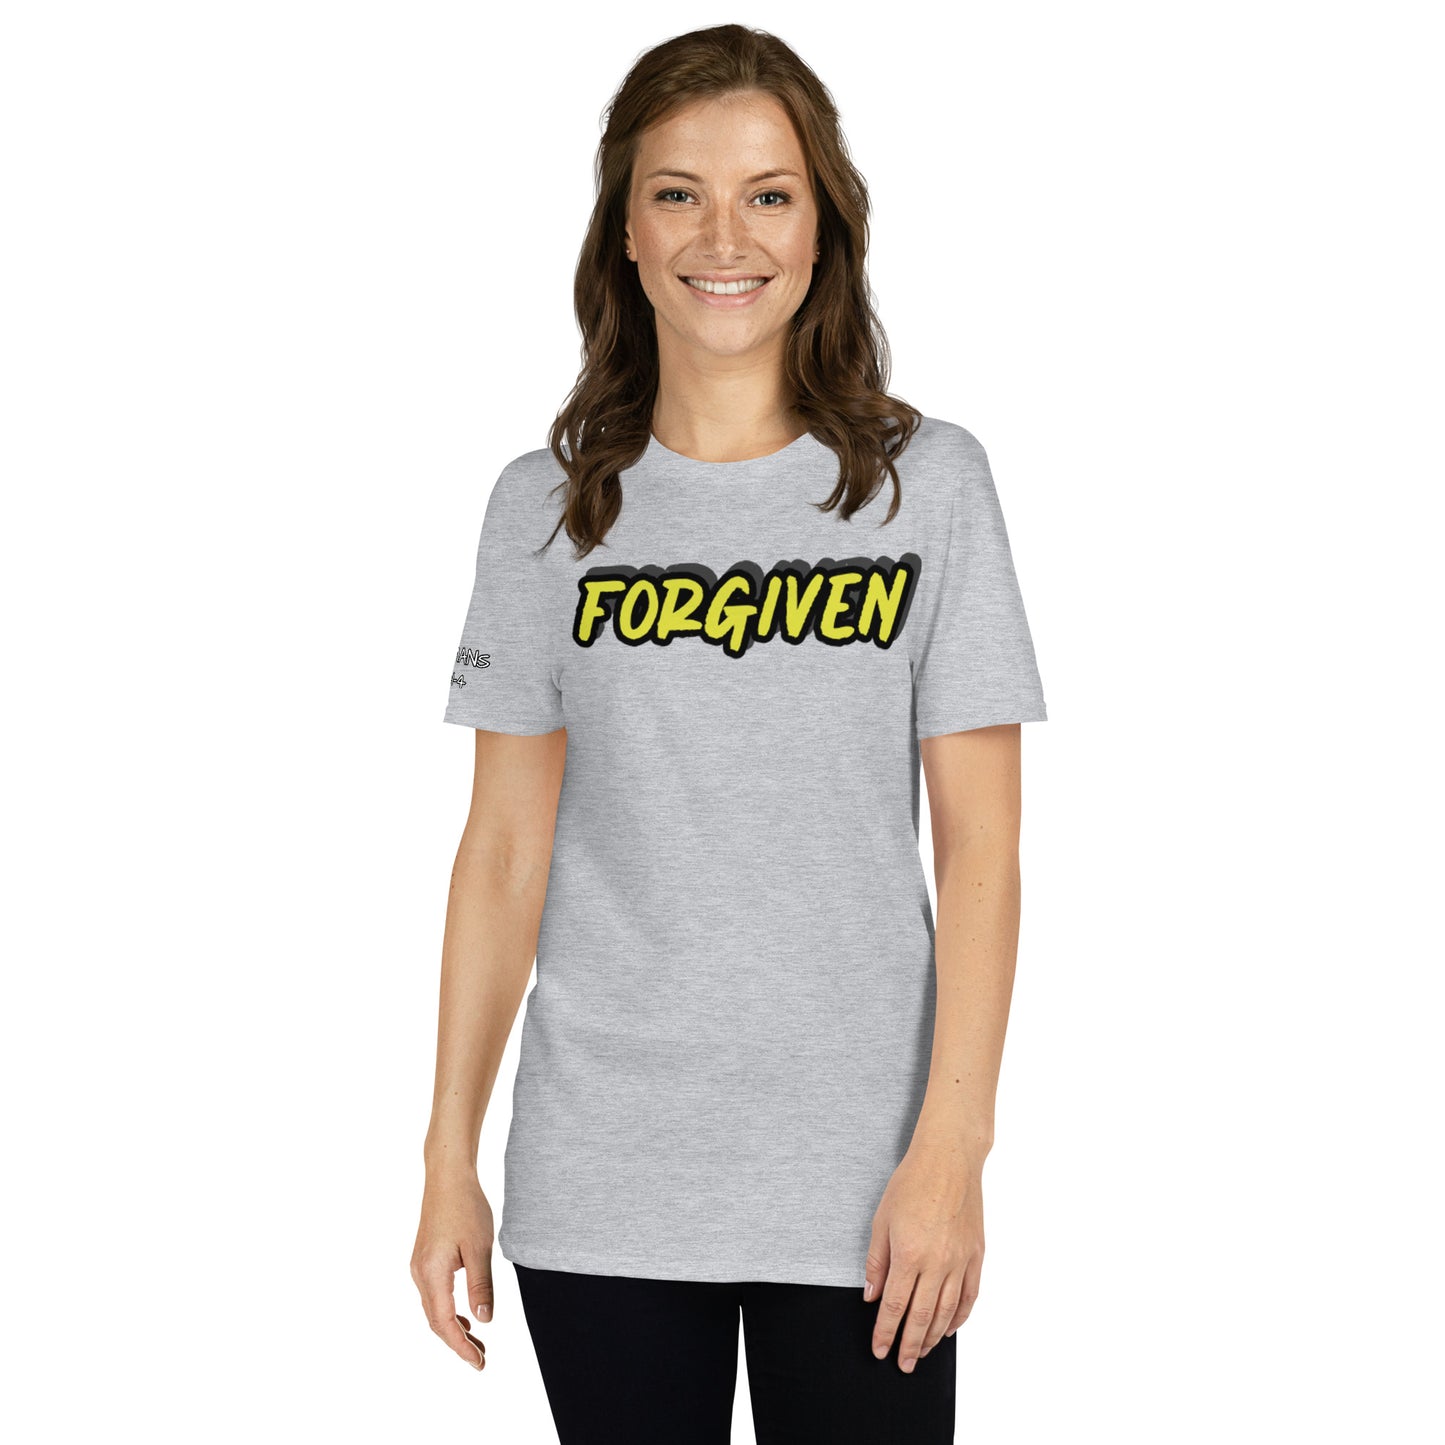 FORGIVEN- Short-Sleeve Unisex T-Shirt